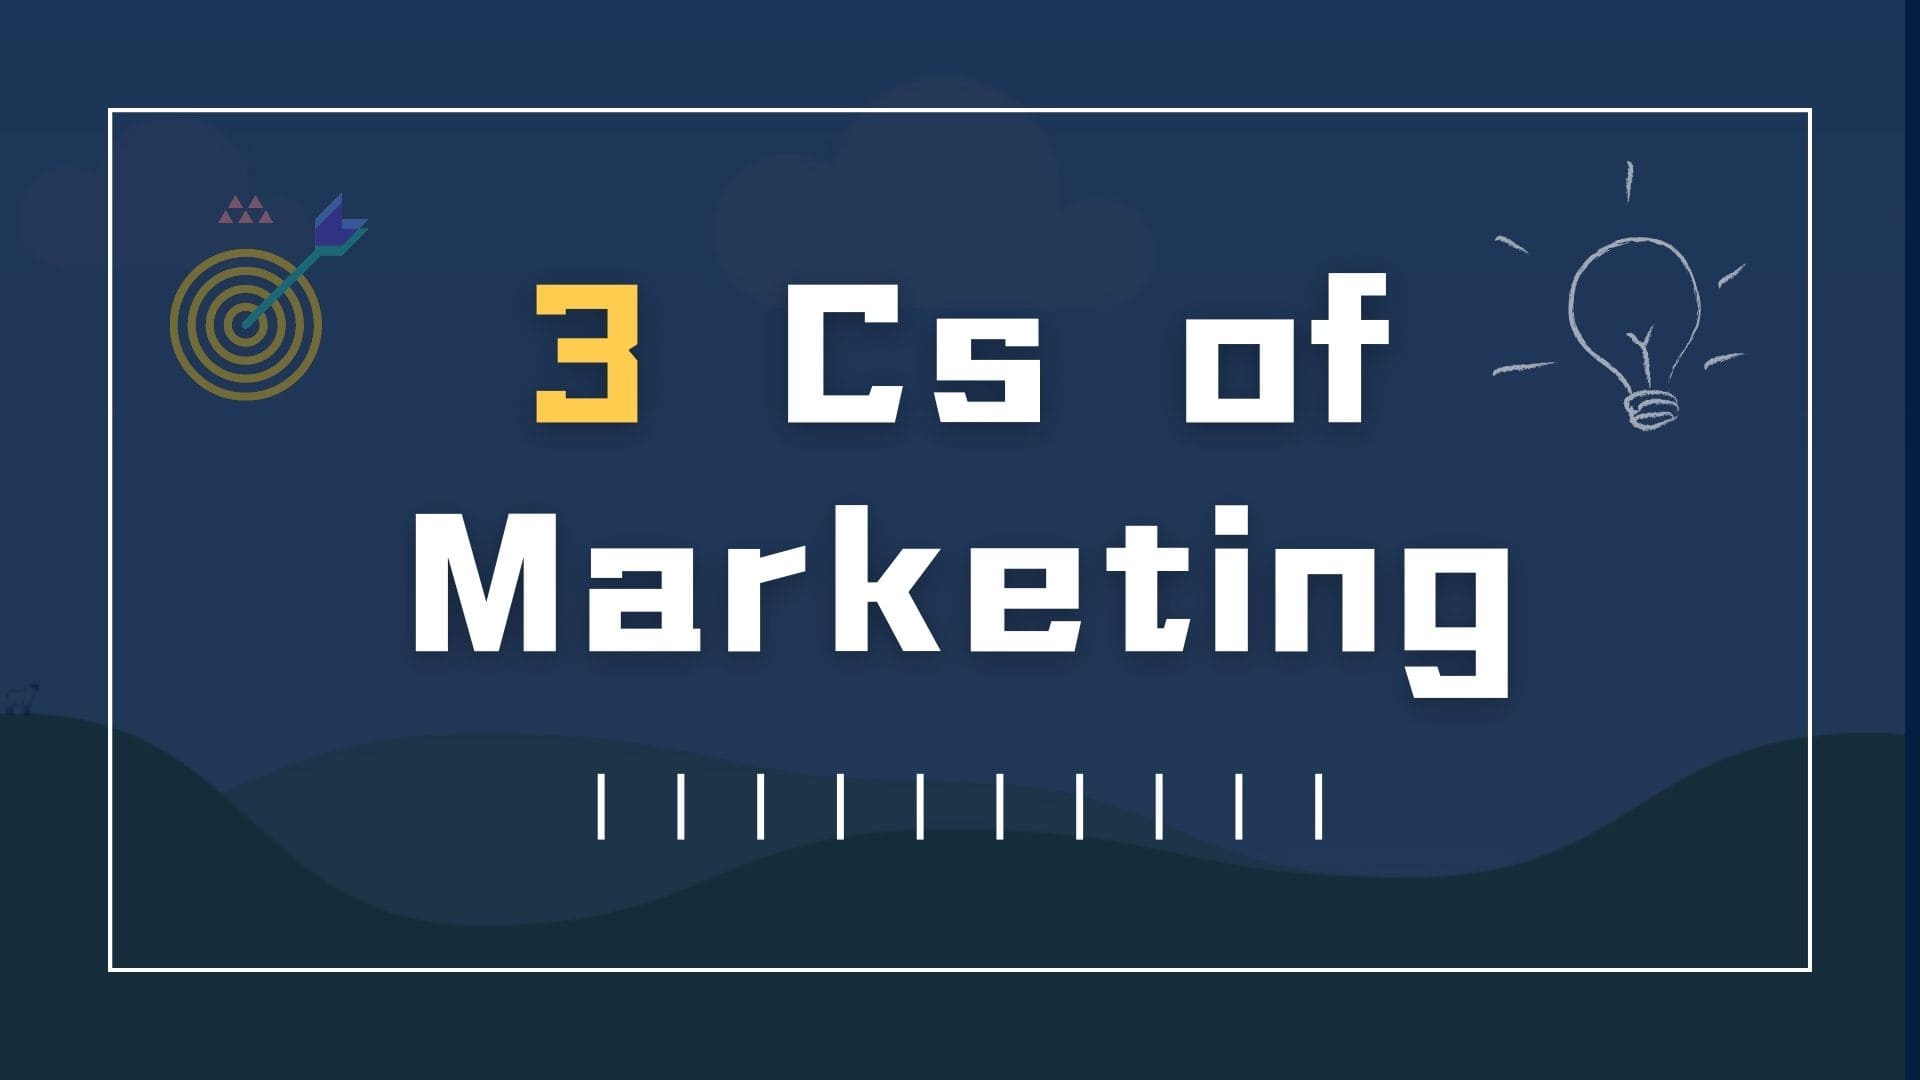 the 3 Cs of marketing